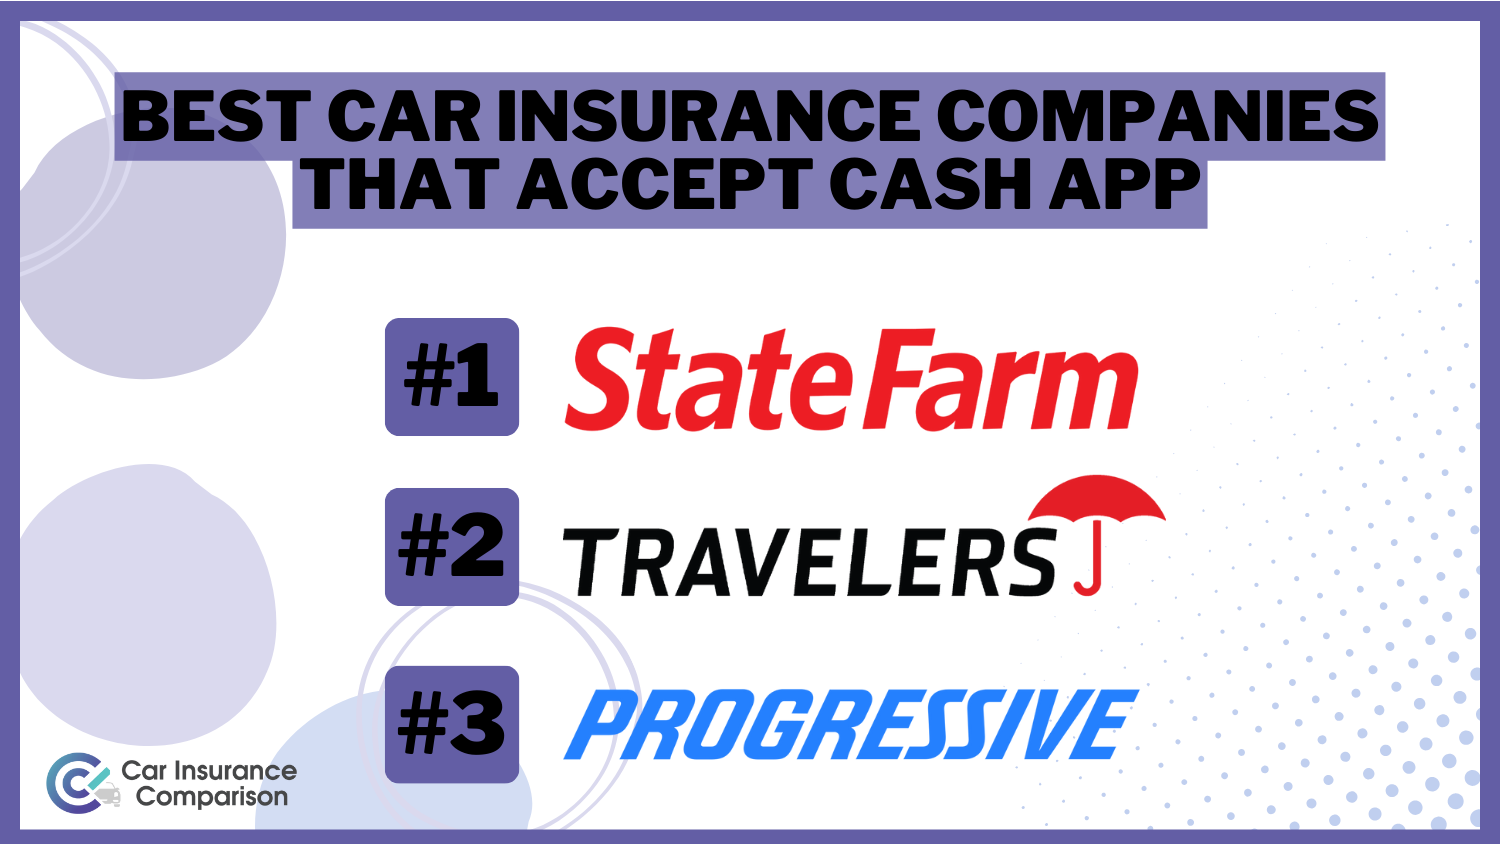 State Farm, Travelers, Progressive: Best Car Insurance Companies That Accept Cash App